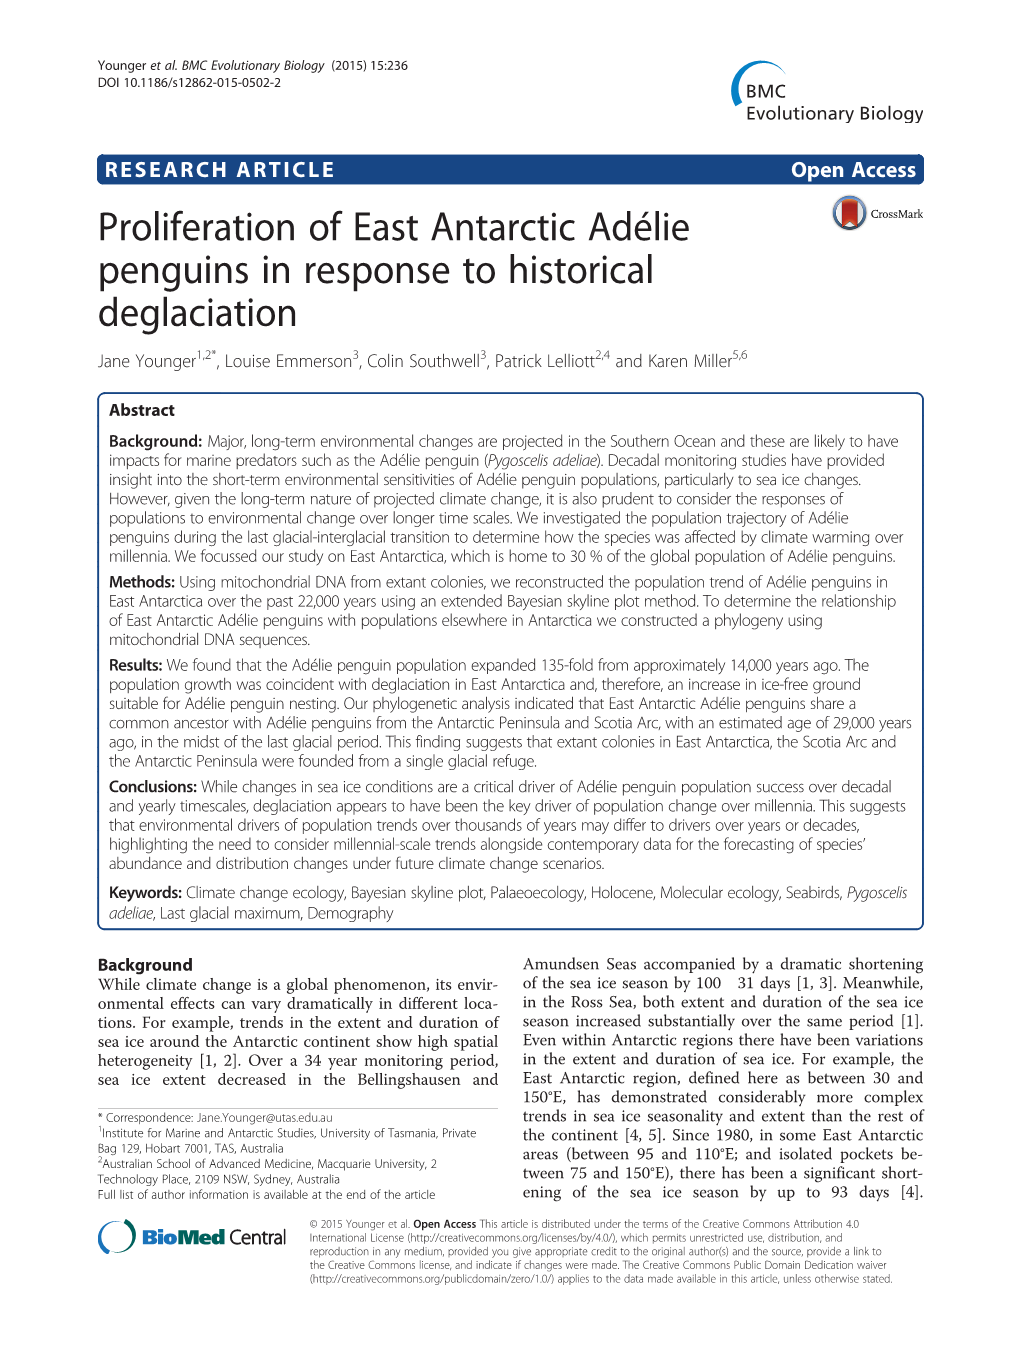 Proliferation of East Antarctic Adélie Penguins In